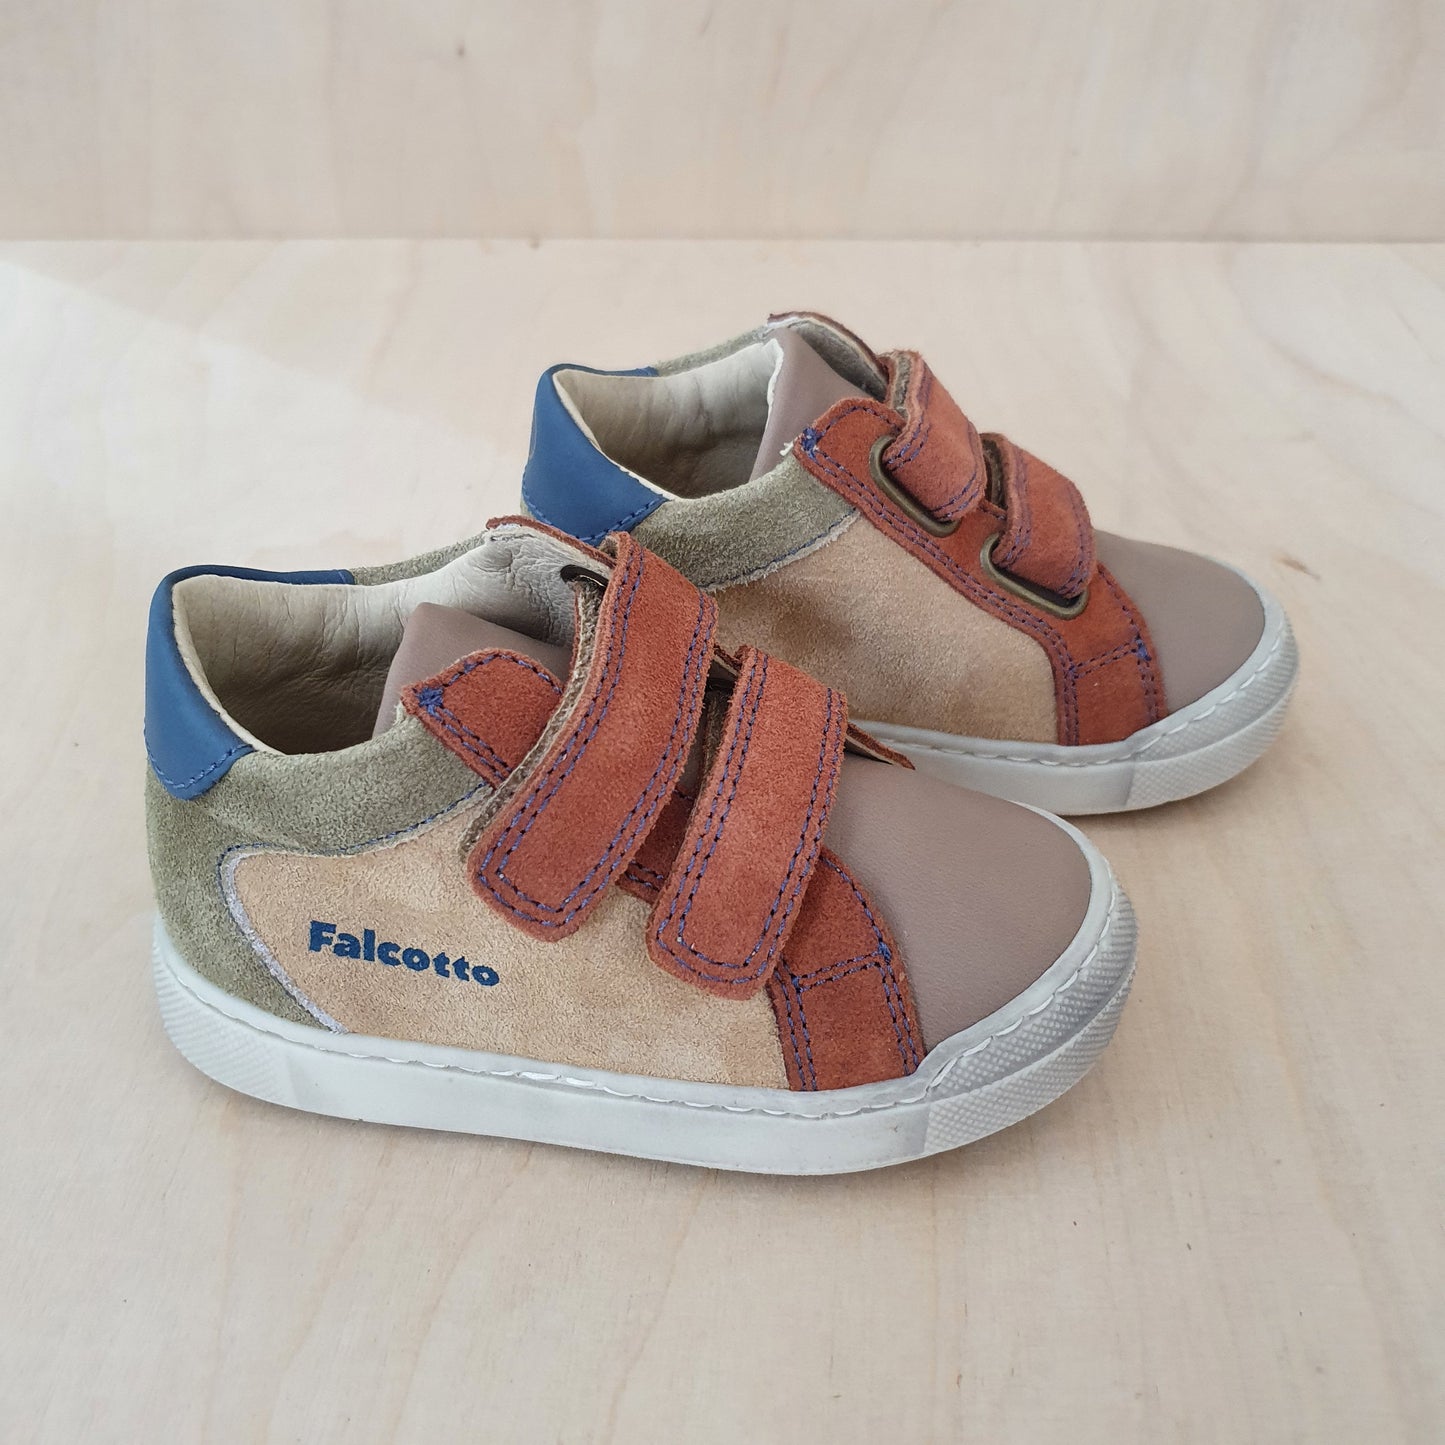 FALCOTTO - stapsneaker patiula - taupe sand, rood/blauw